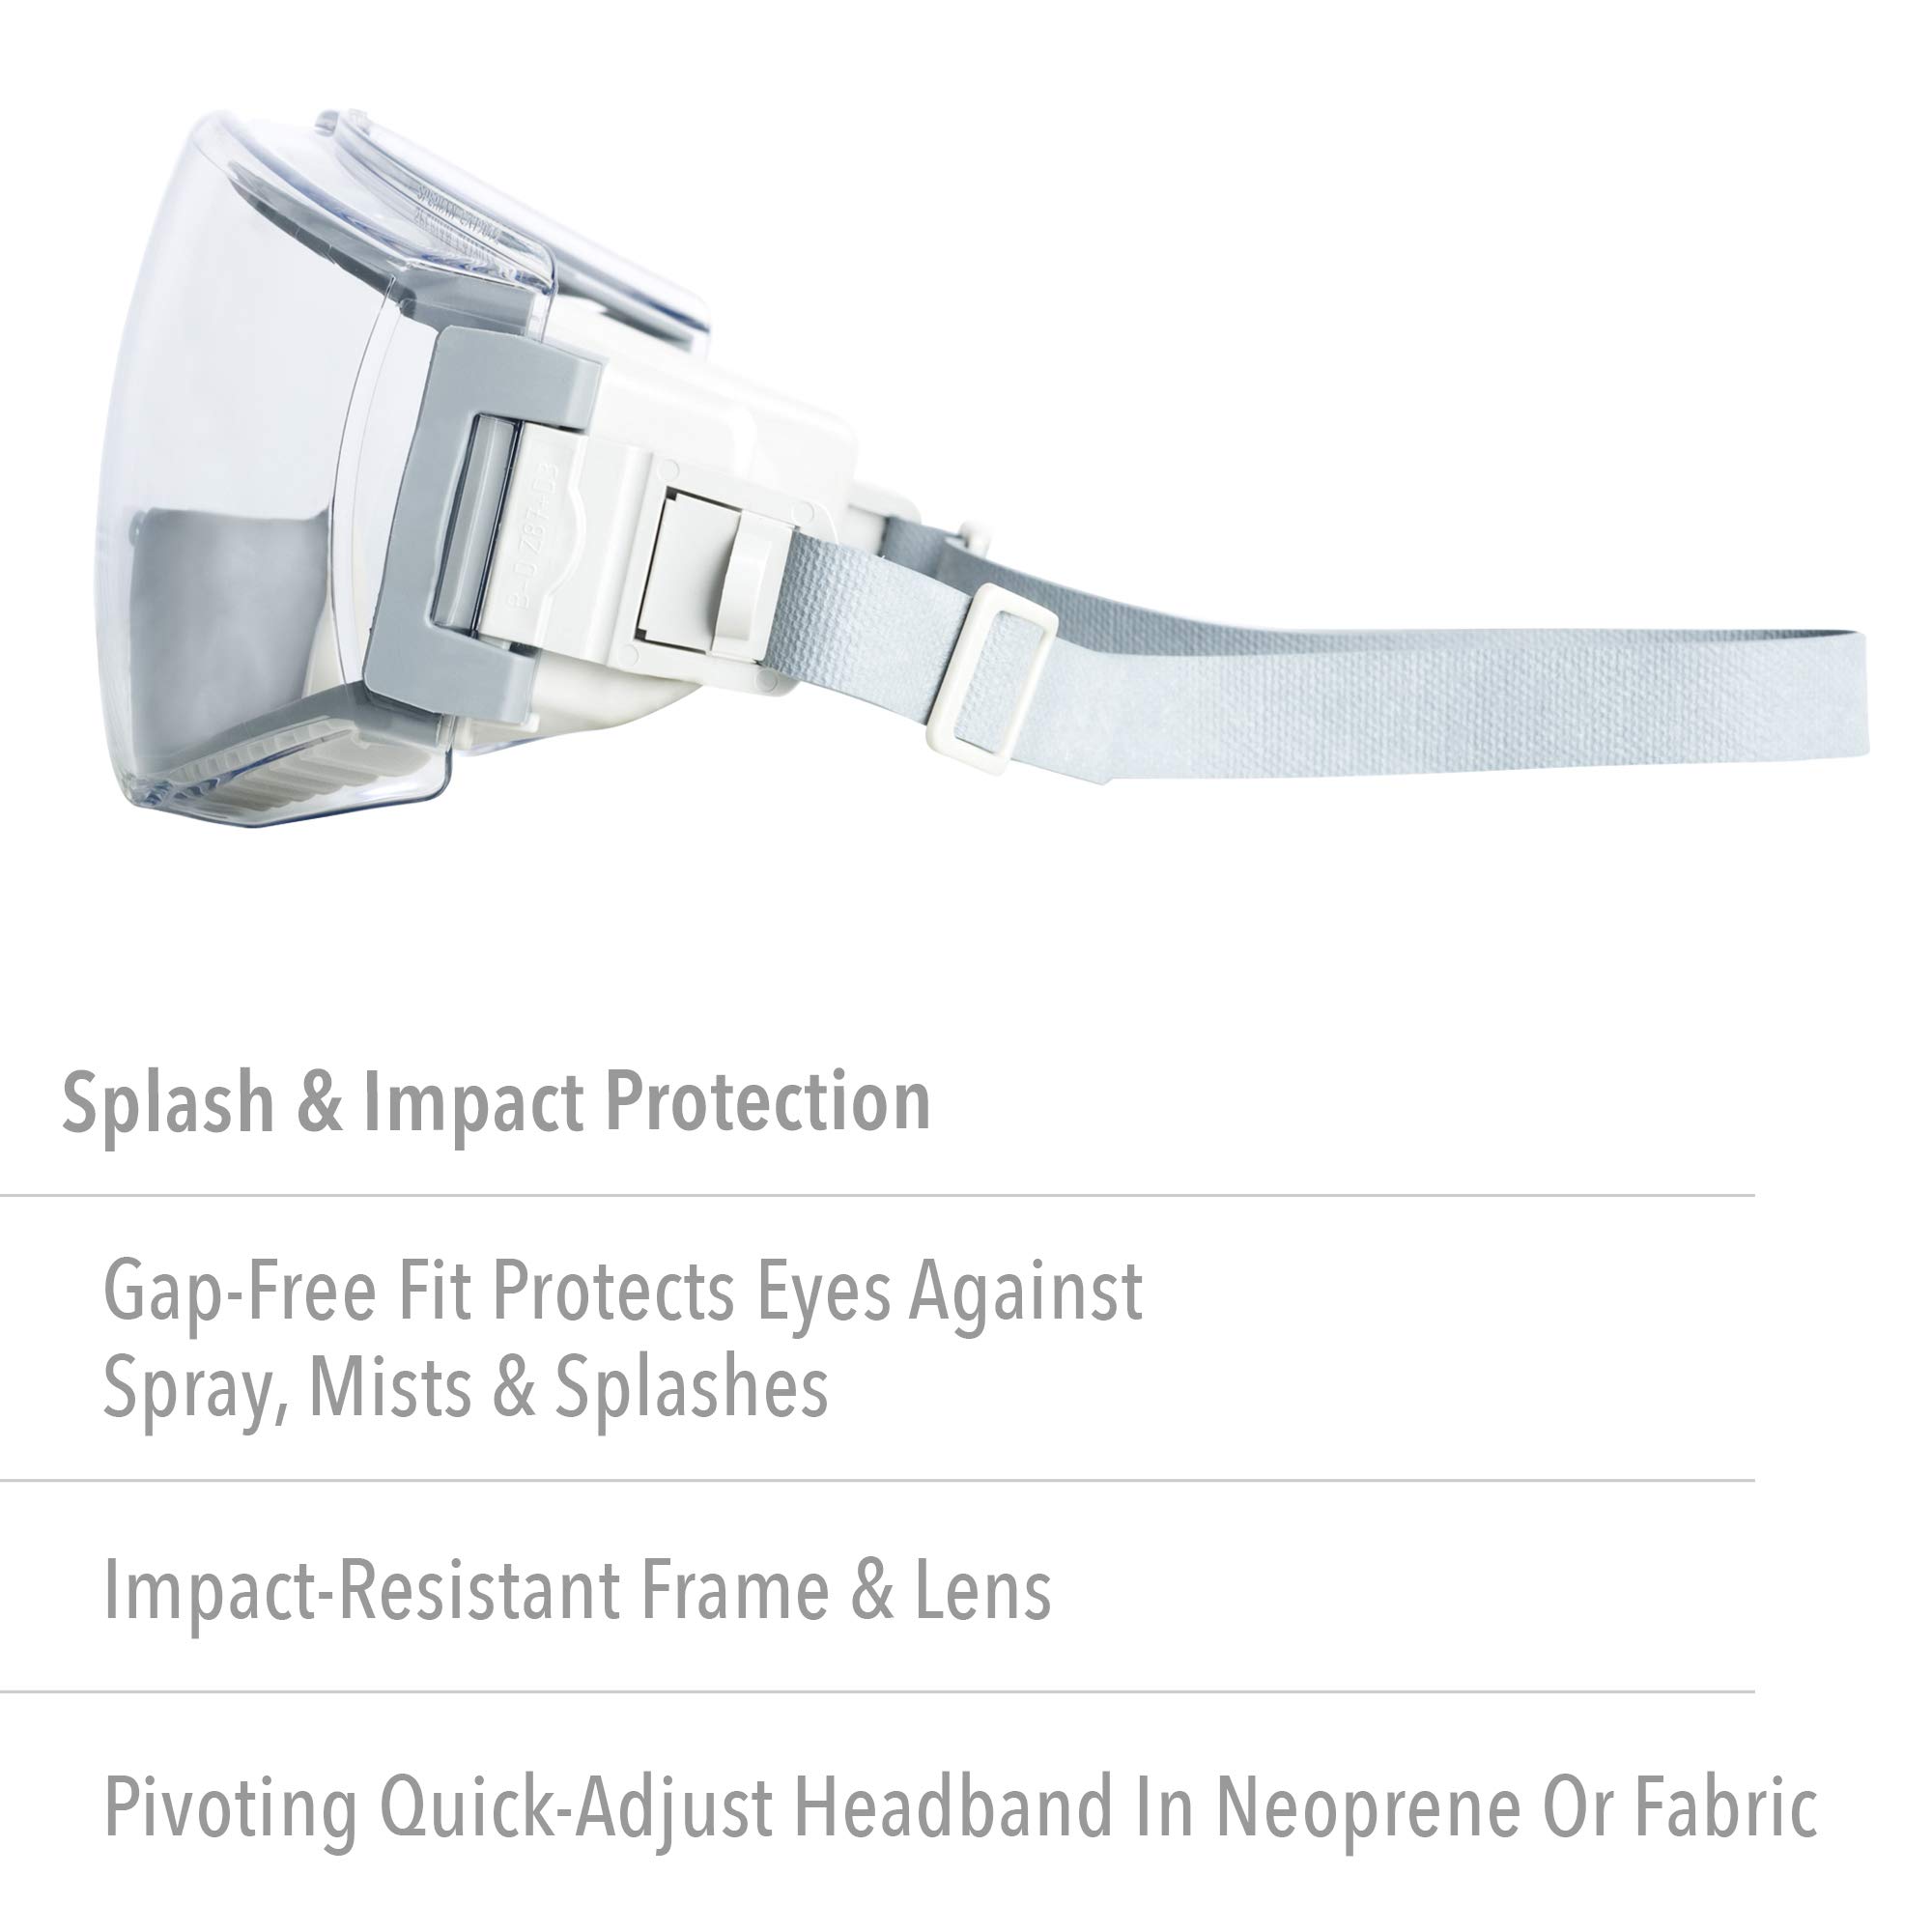 Honeywell Uvex Ademco Stealth Safety Goggles with Clear HydroShield Anti-Fog Lens, Grey Body & Neoprene Headband (S3960HS)